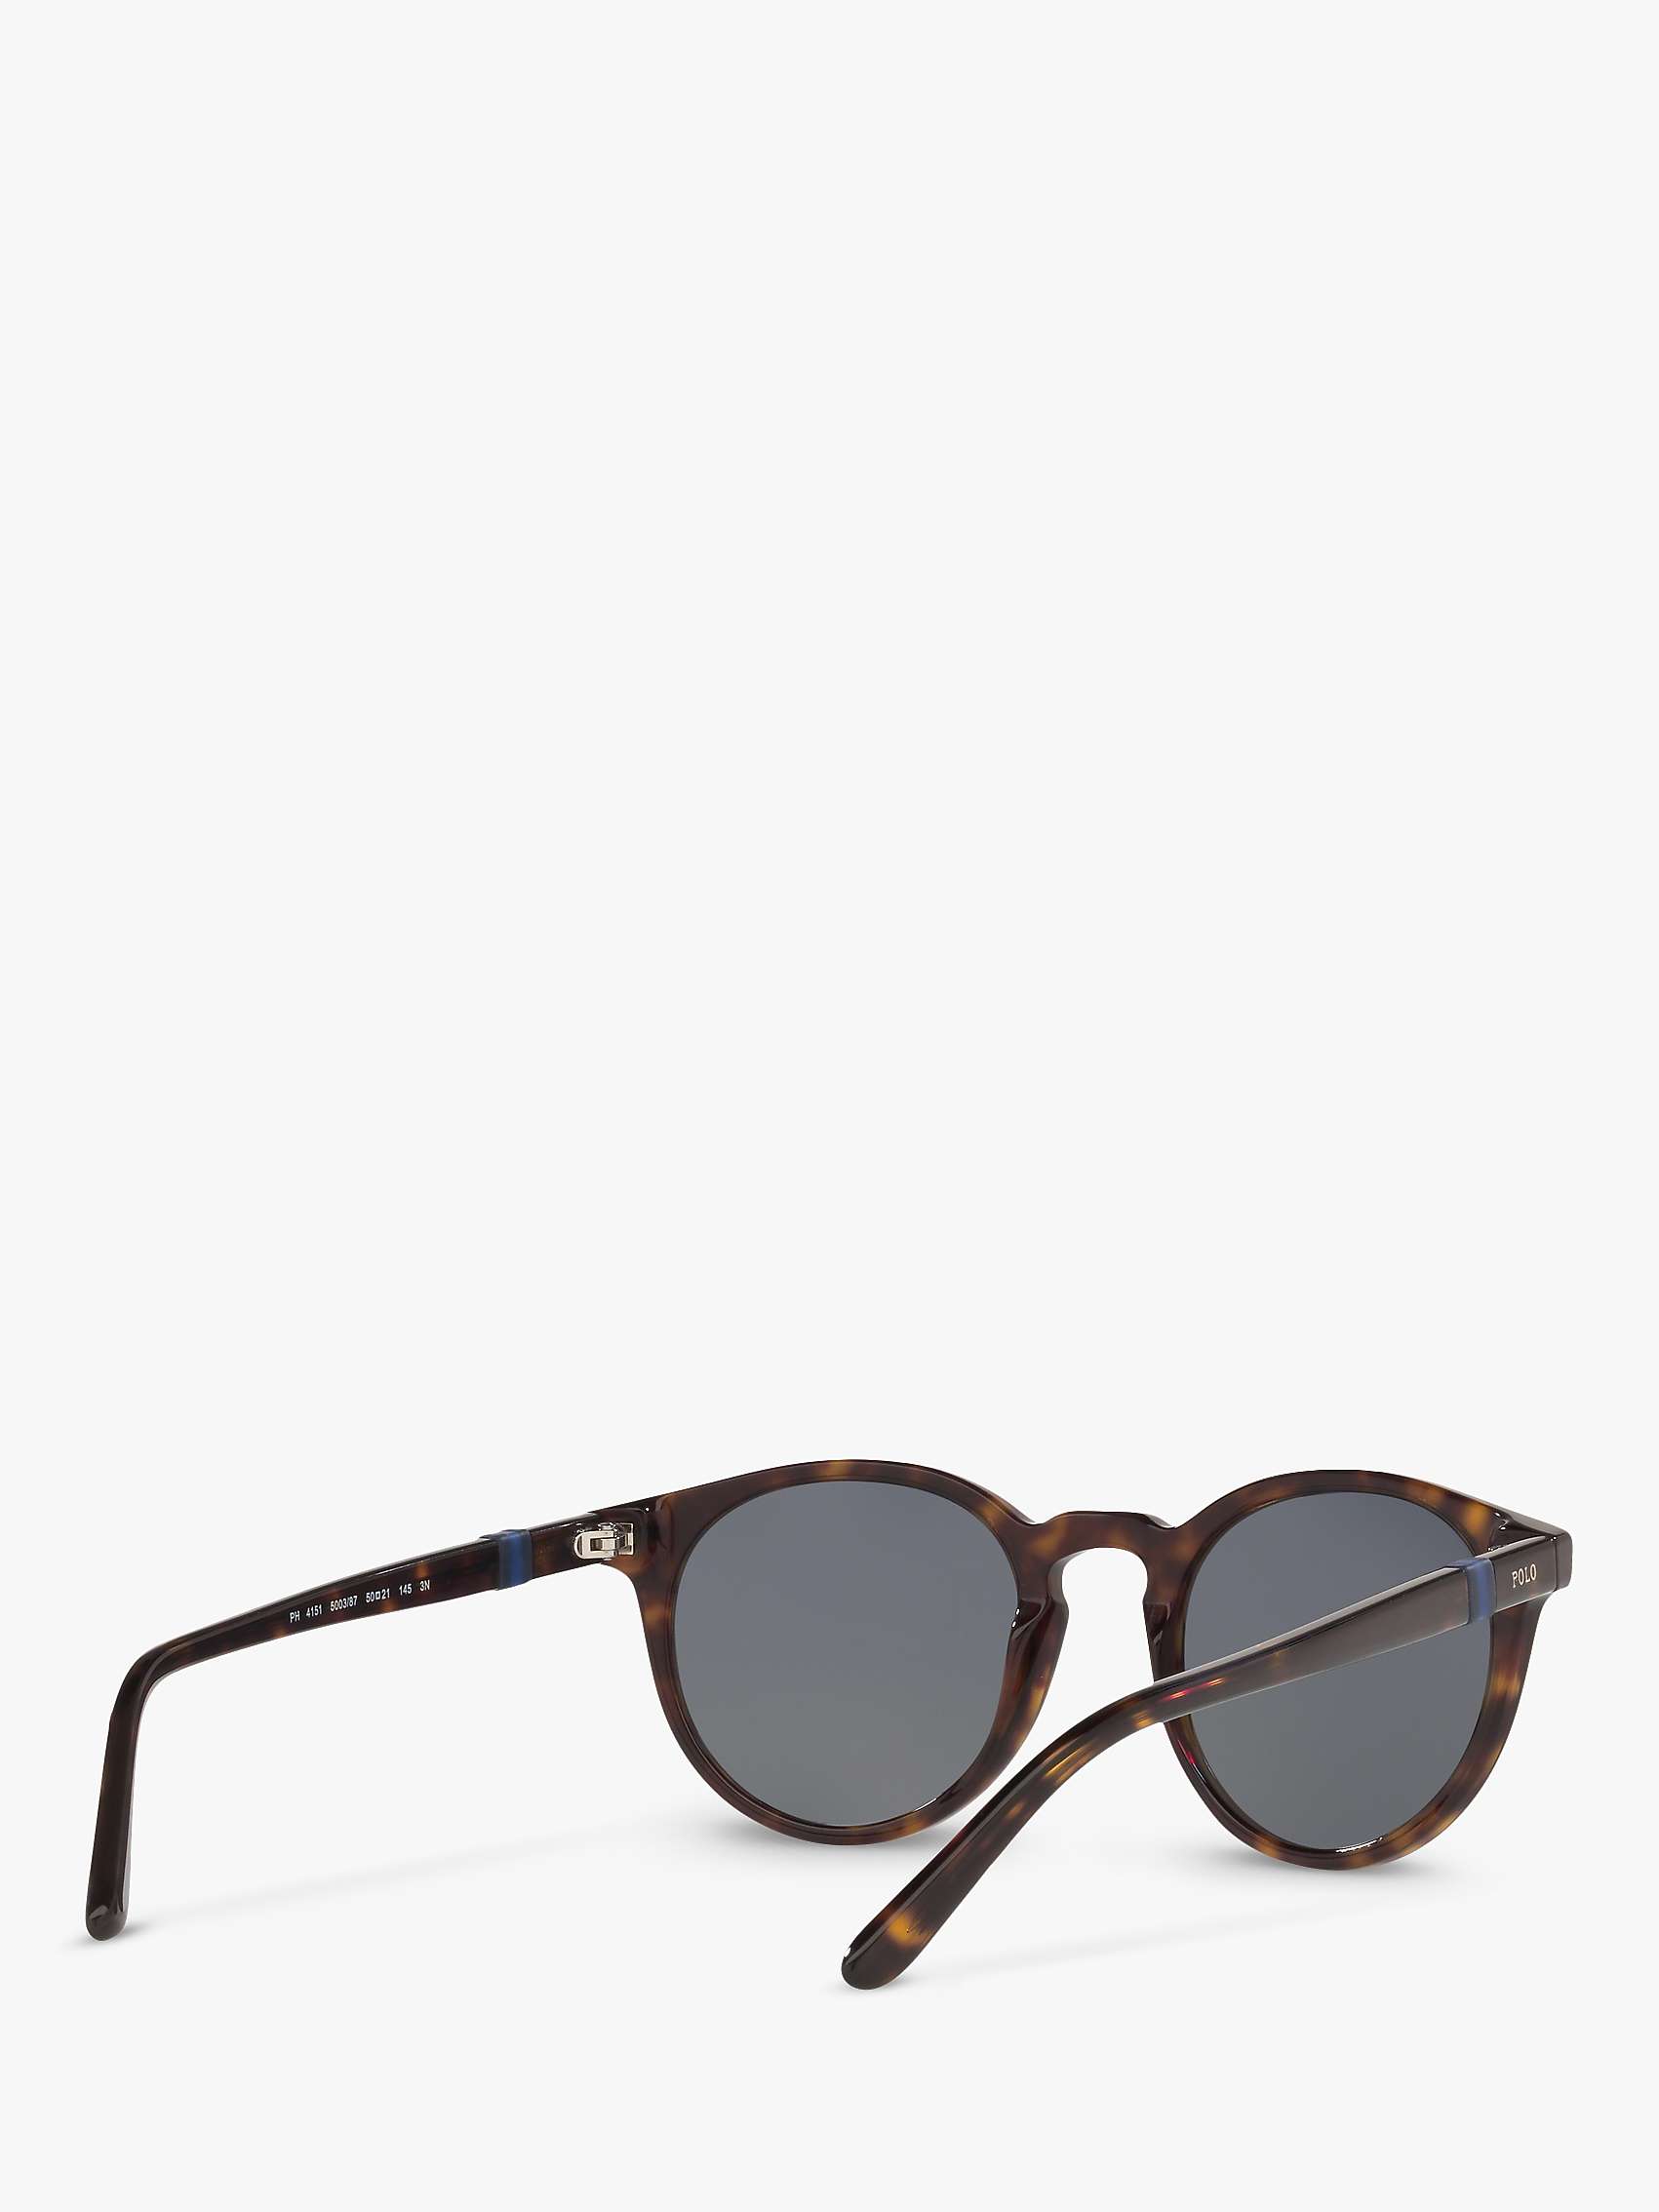 Buy Polo Ralph Lauren PH4151 Men's Phantos Sunglasses Online at johnlewis.com